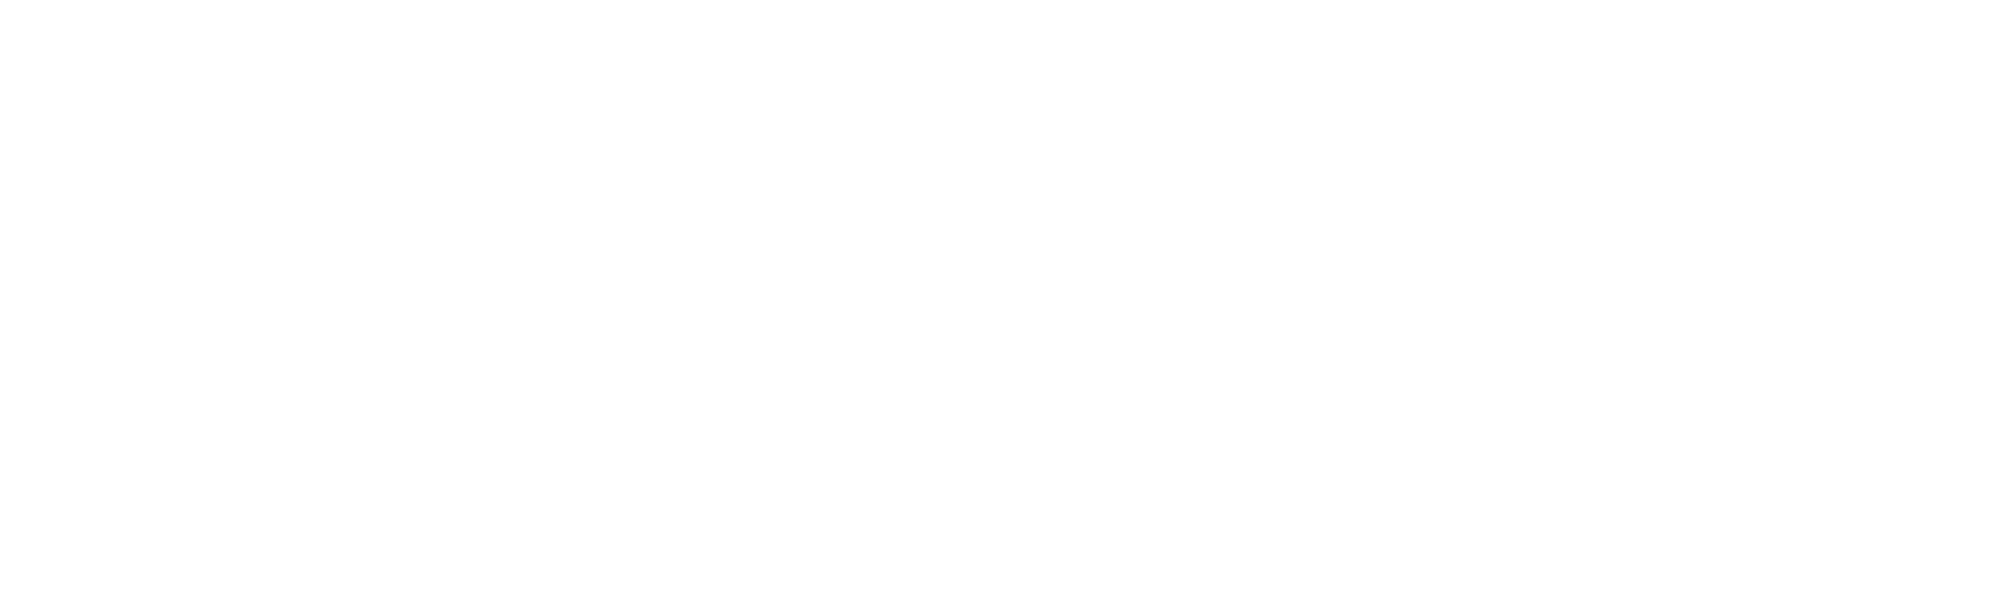 bnr_contact_text